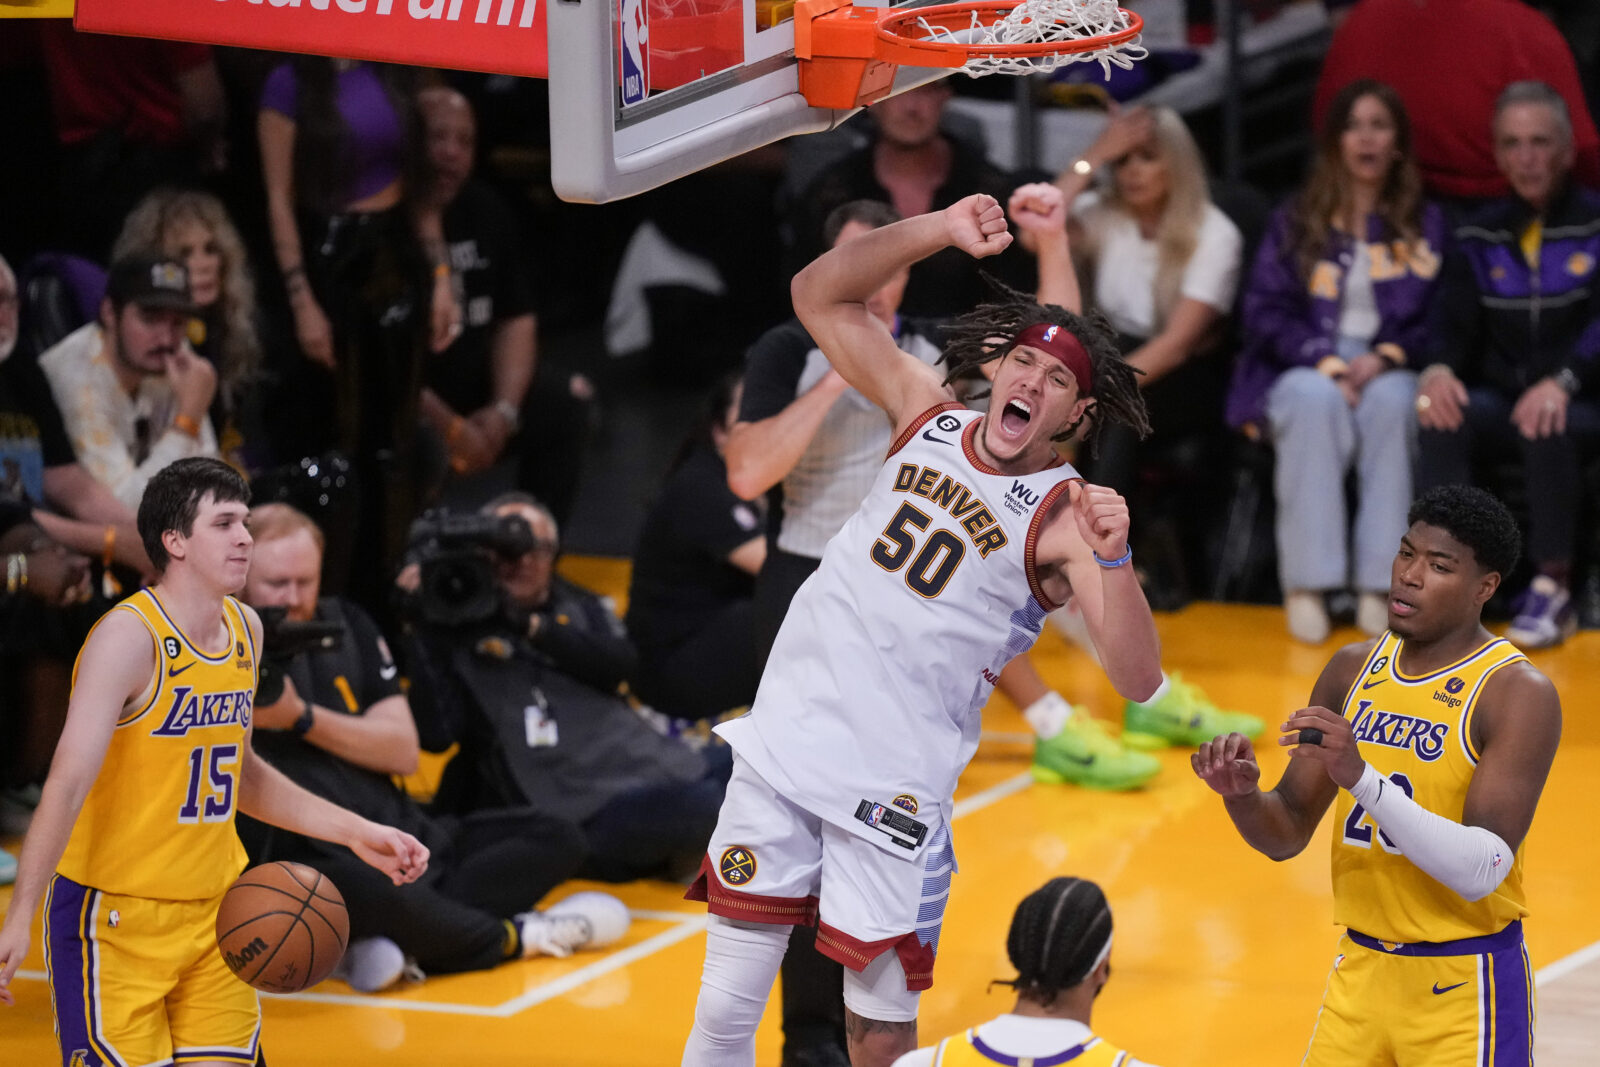 Kenny Smith: NBA Finals, LeBron-Magic Johnson comparisons - Sports